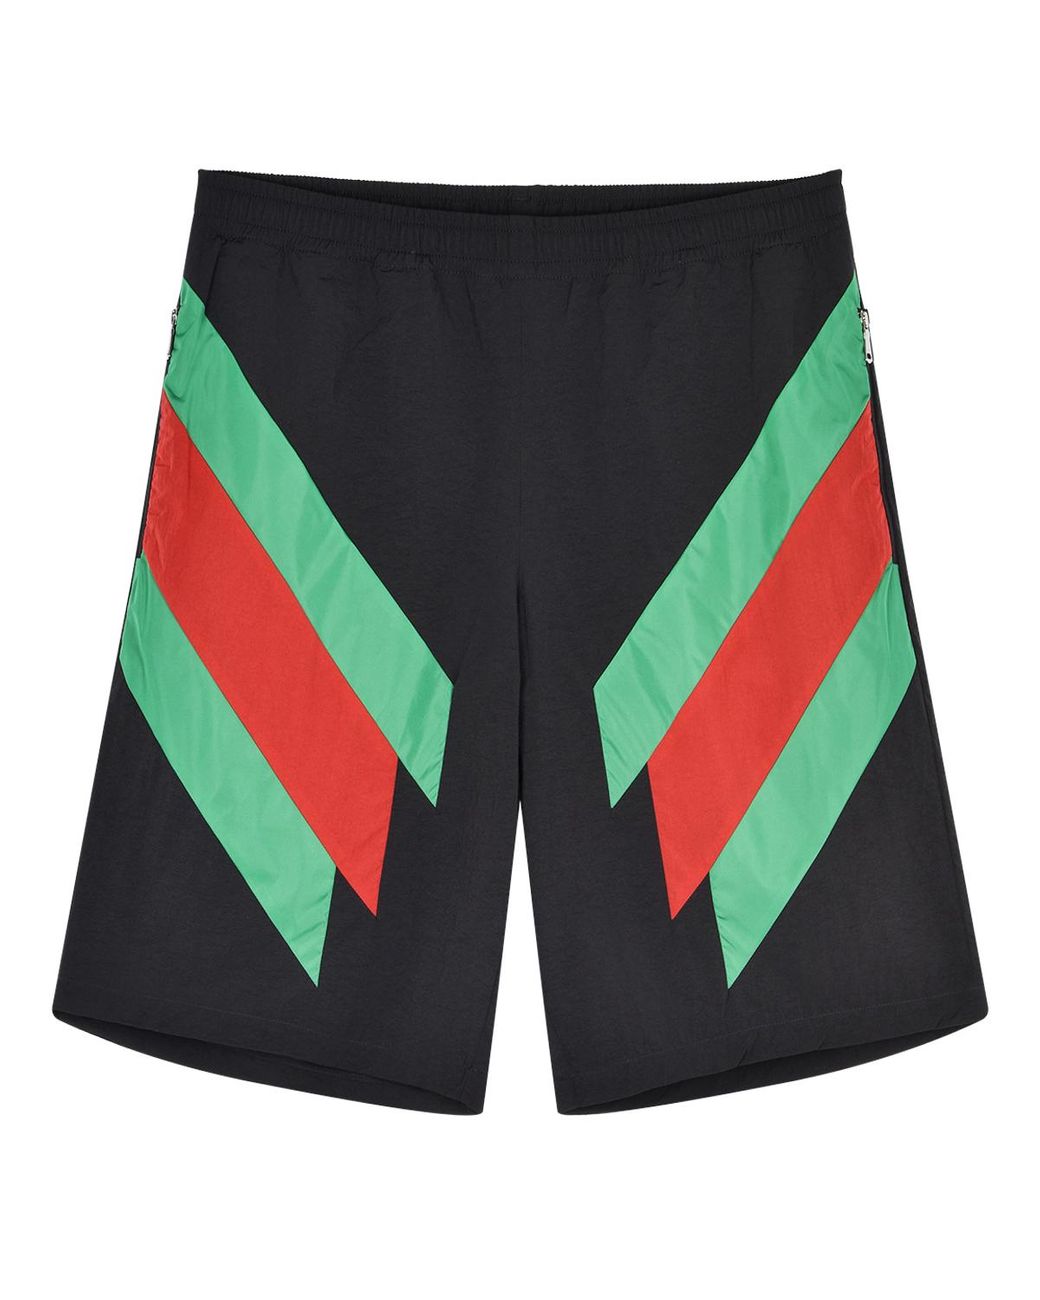 Gucci Black Shorts for Men - Lyst